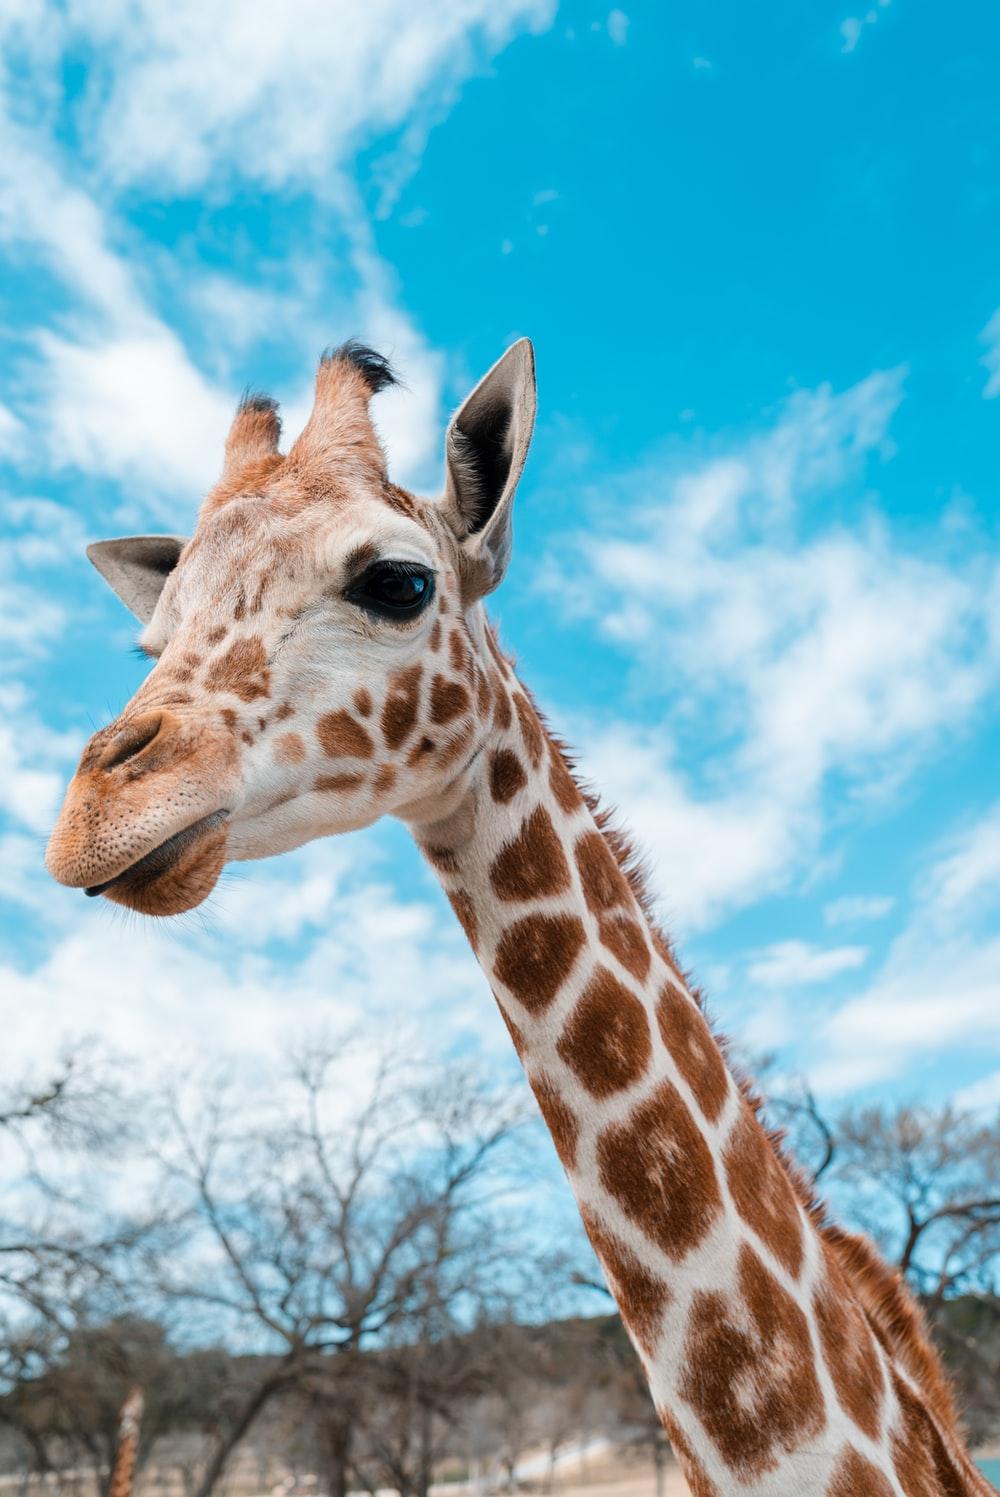 Giraffe Image: Download HD Picture & Photo